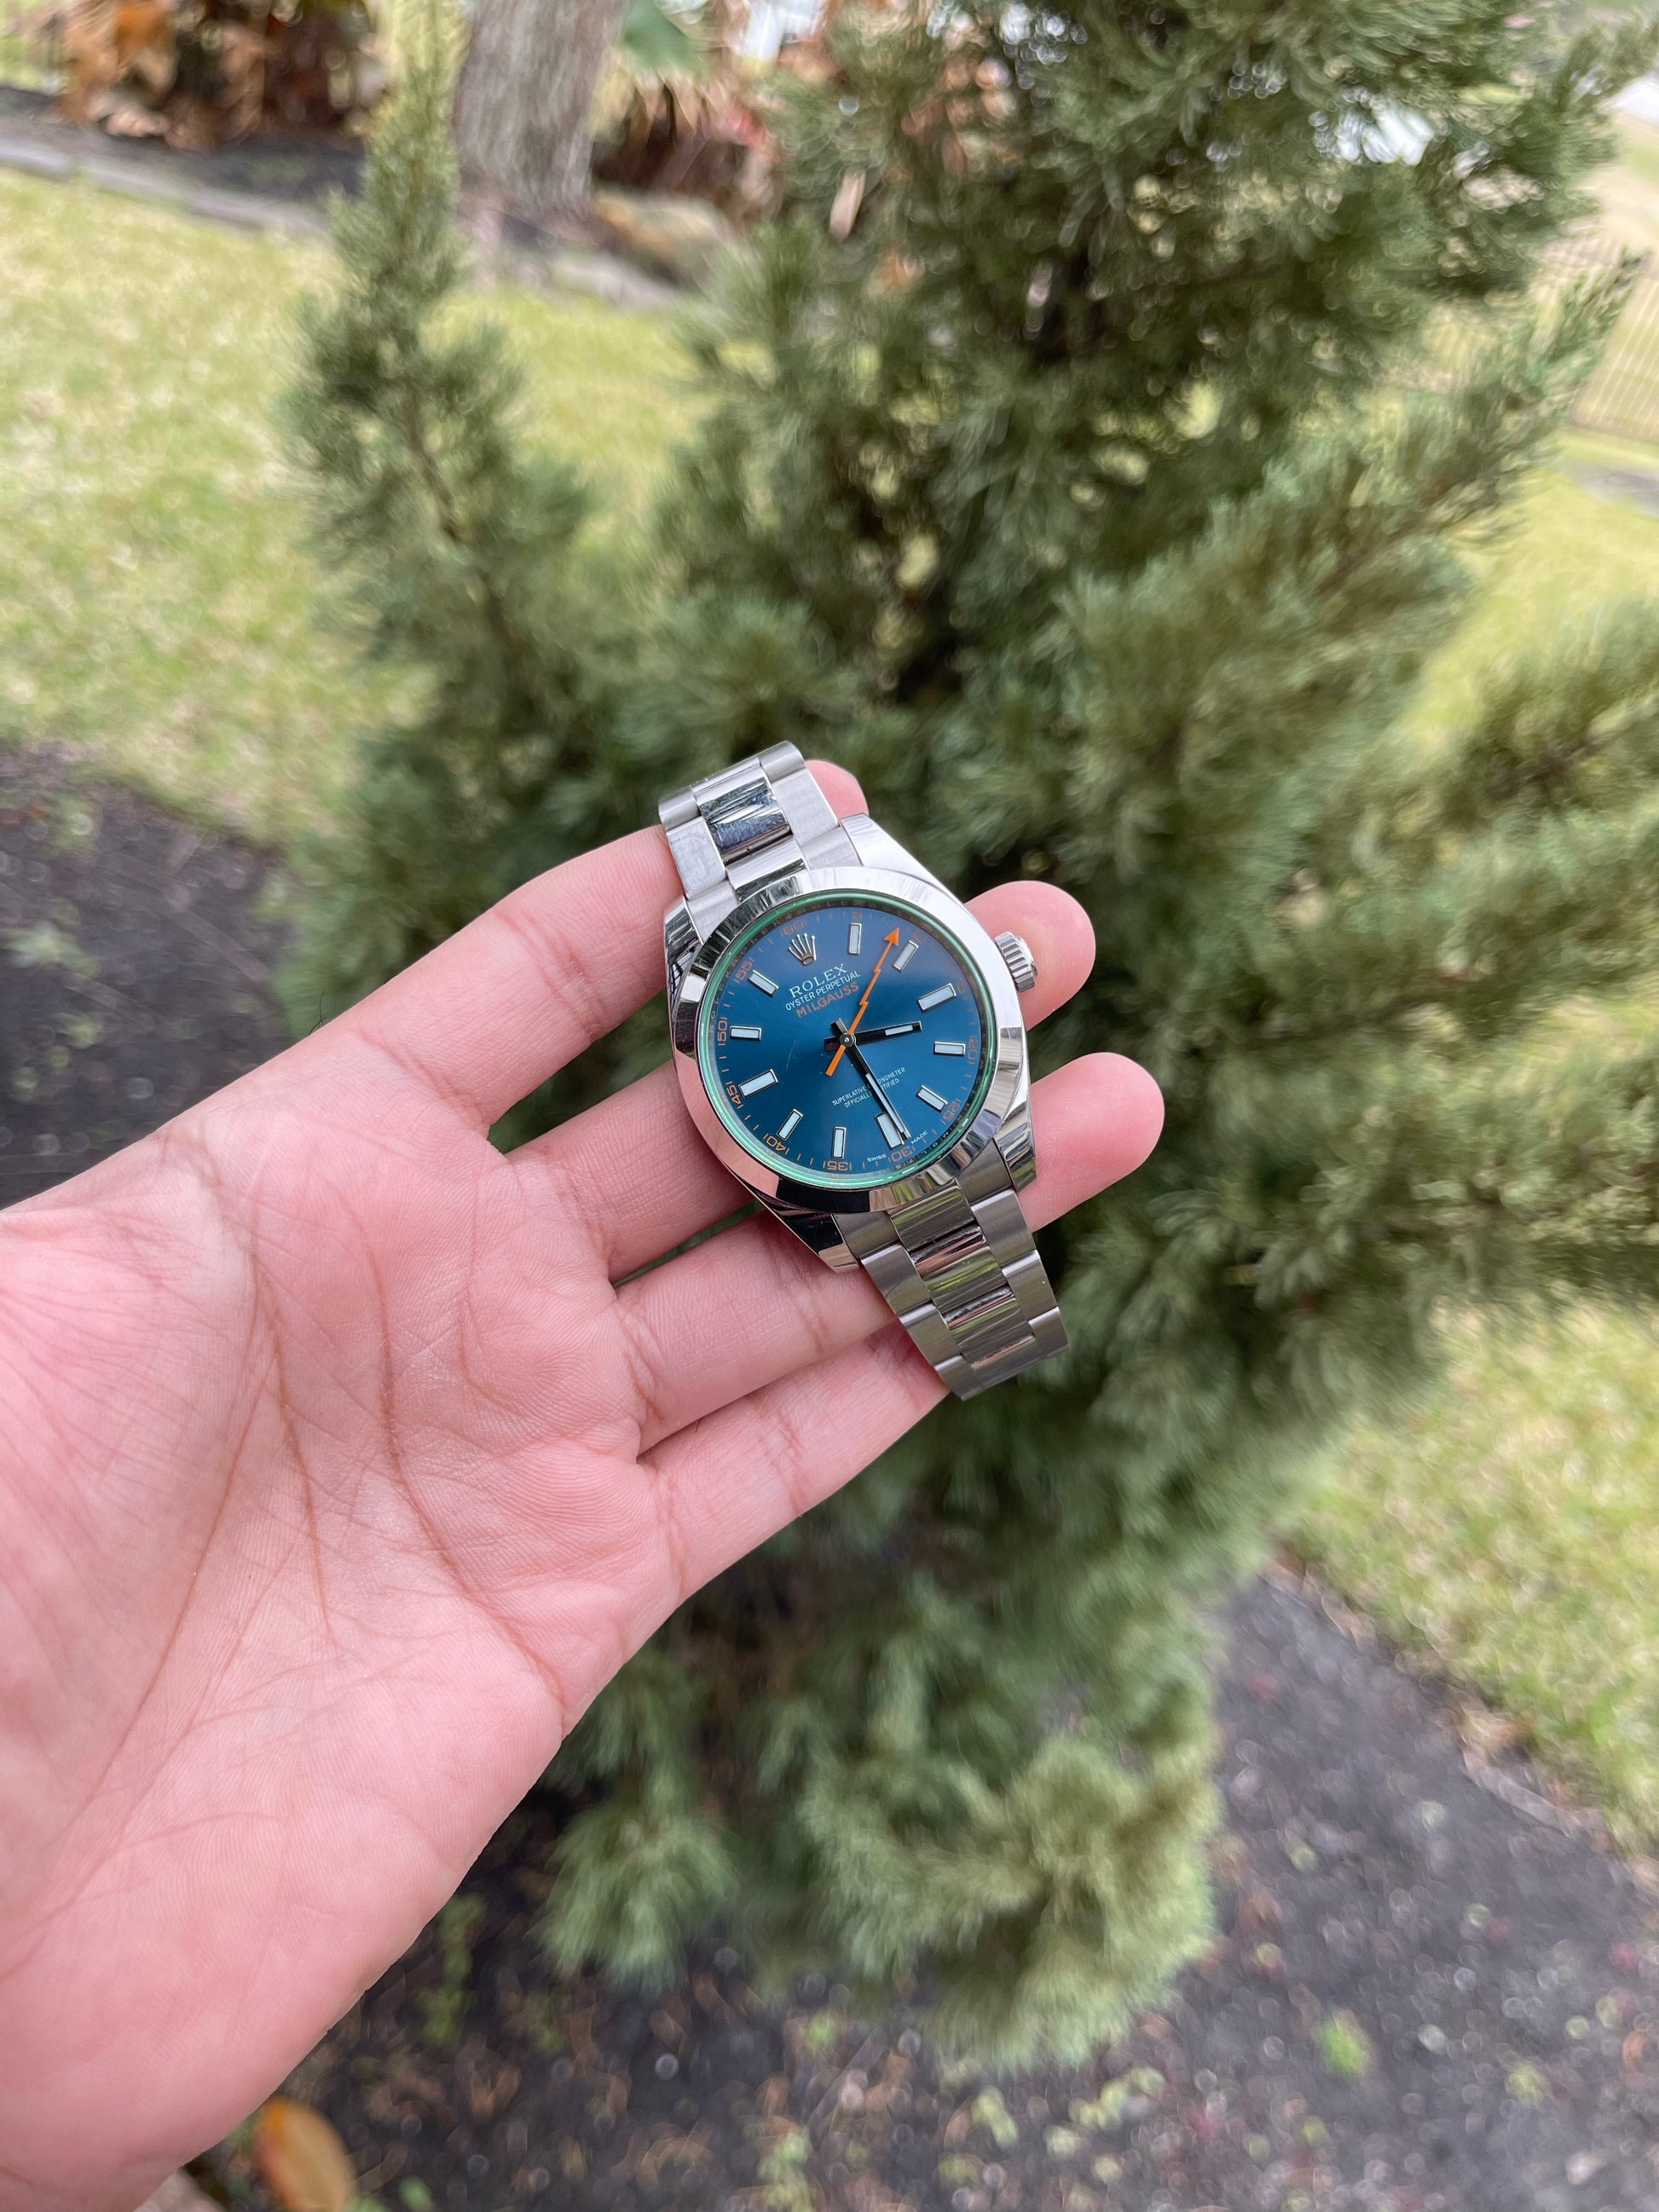 Rolex Submariner Date 40mm Green Bezel Men's Watch 116610-LV